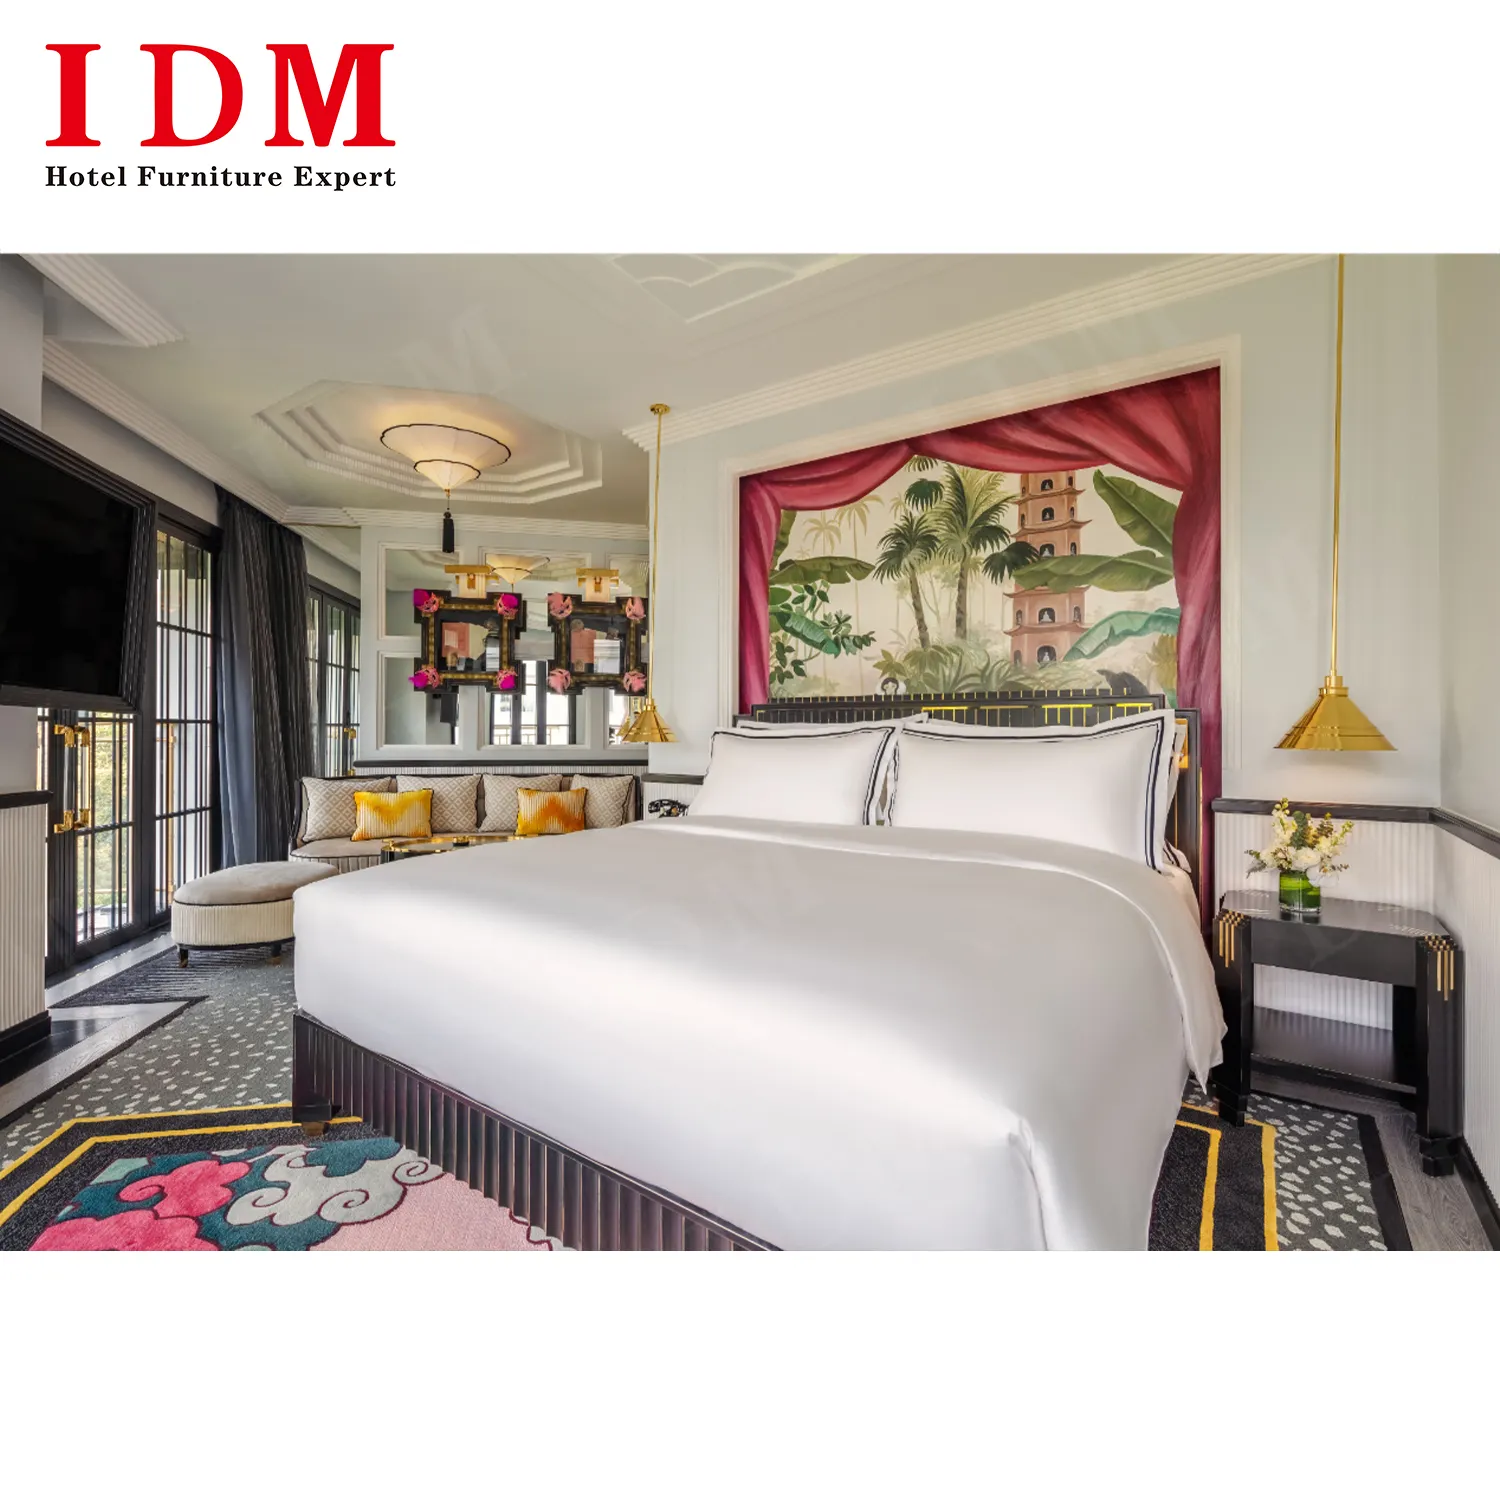 Proyek perhotelan mewah desain Modern Hotel dan menyesuaikan furnitur set kamar tidur bintang 5 kontemporer